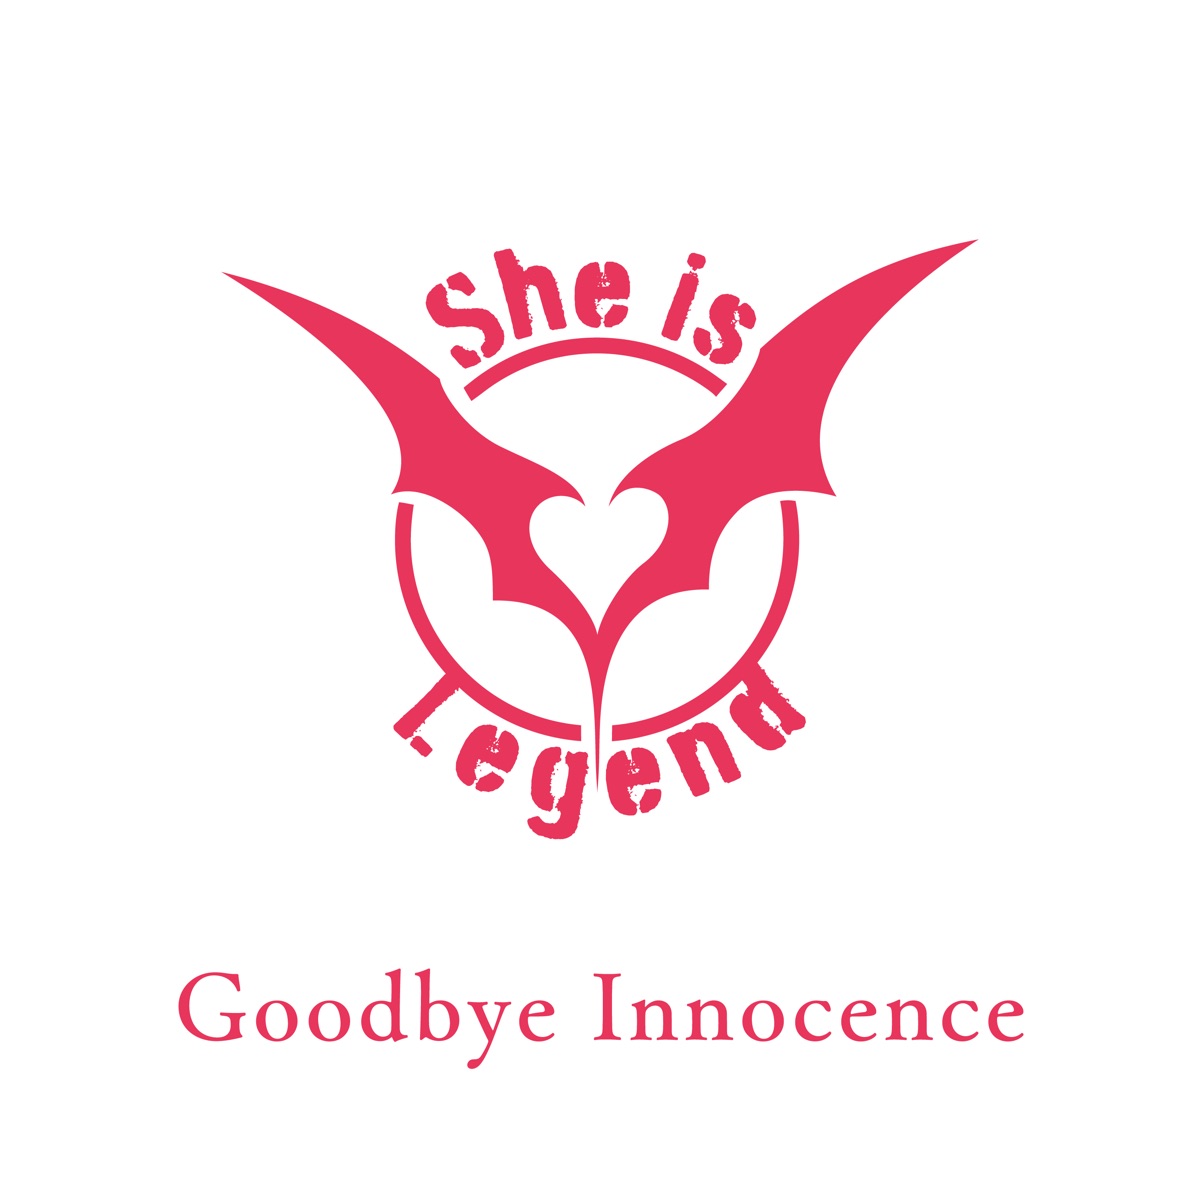 『She is Legend - 贅沢な感情』収録の『贅沢な感情』ジャケット